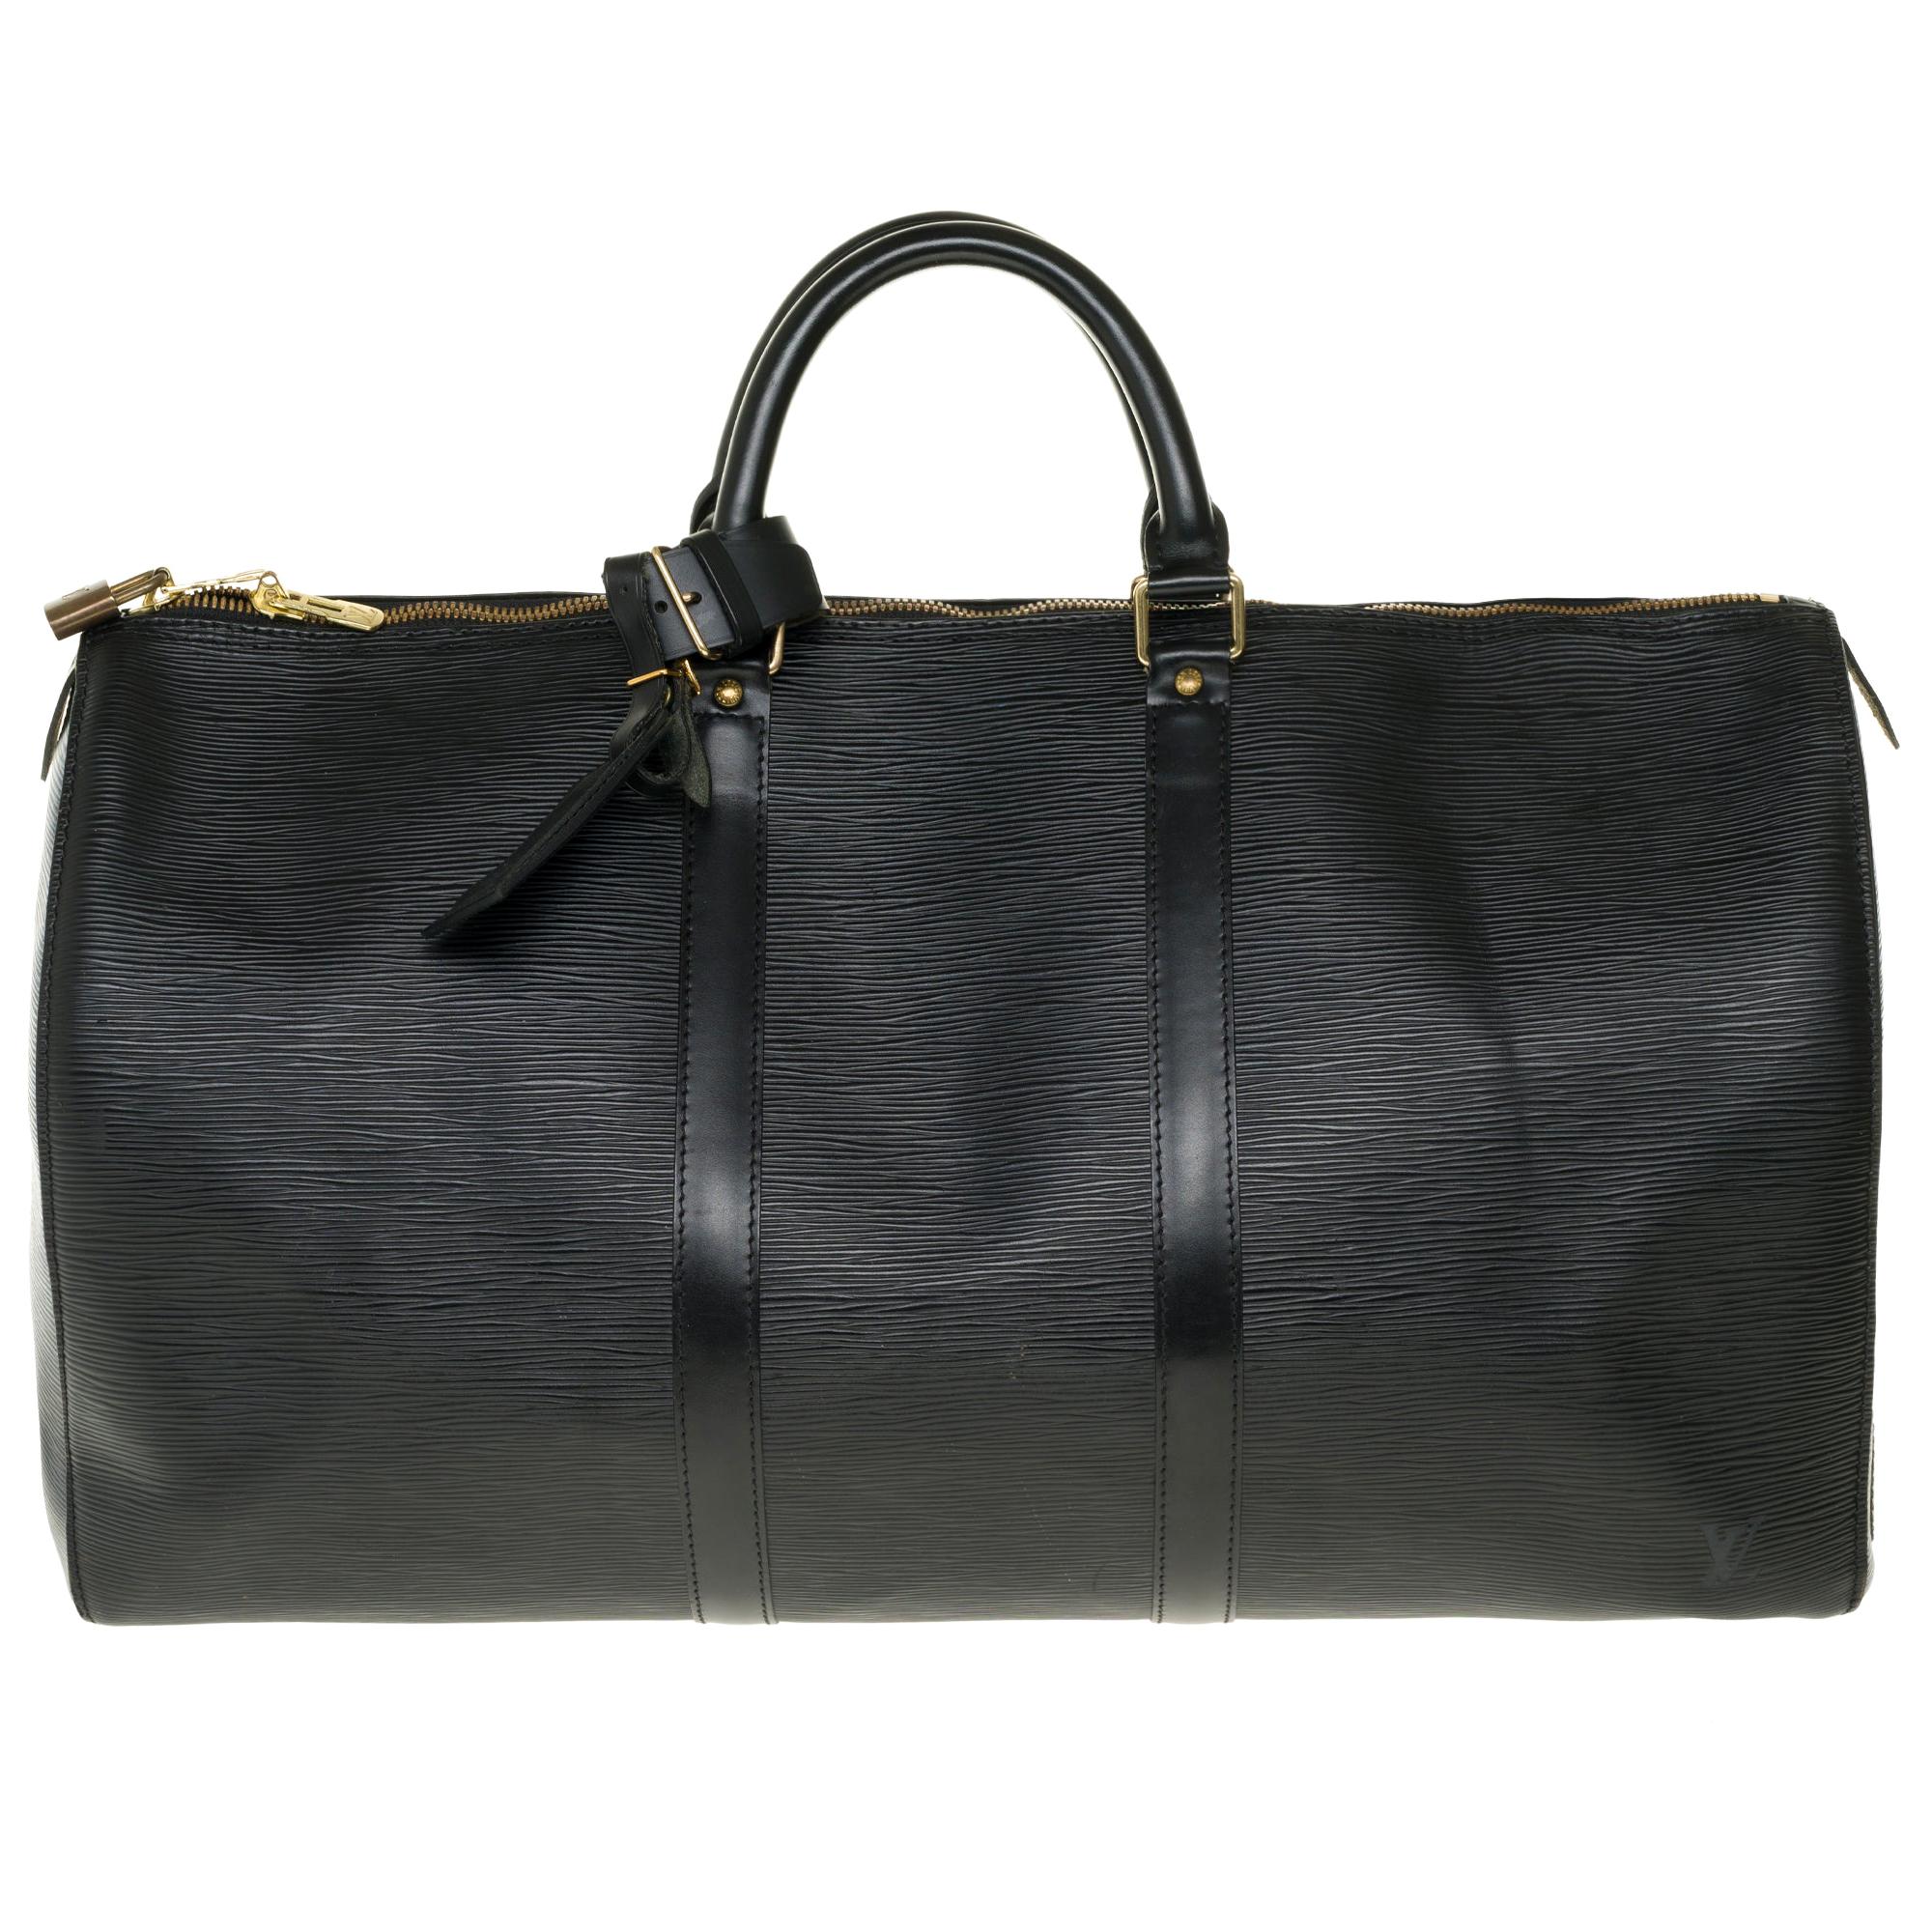 Louis Vuitton Keepall 50 Travel bag in black épi leather